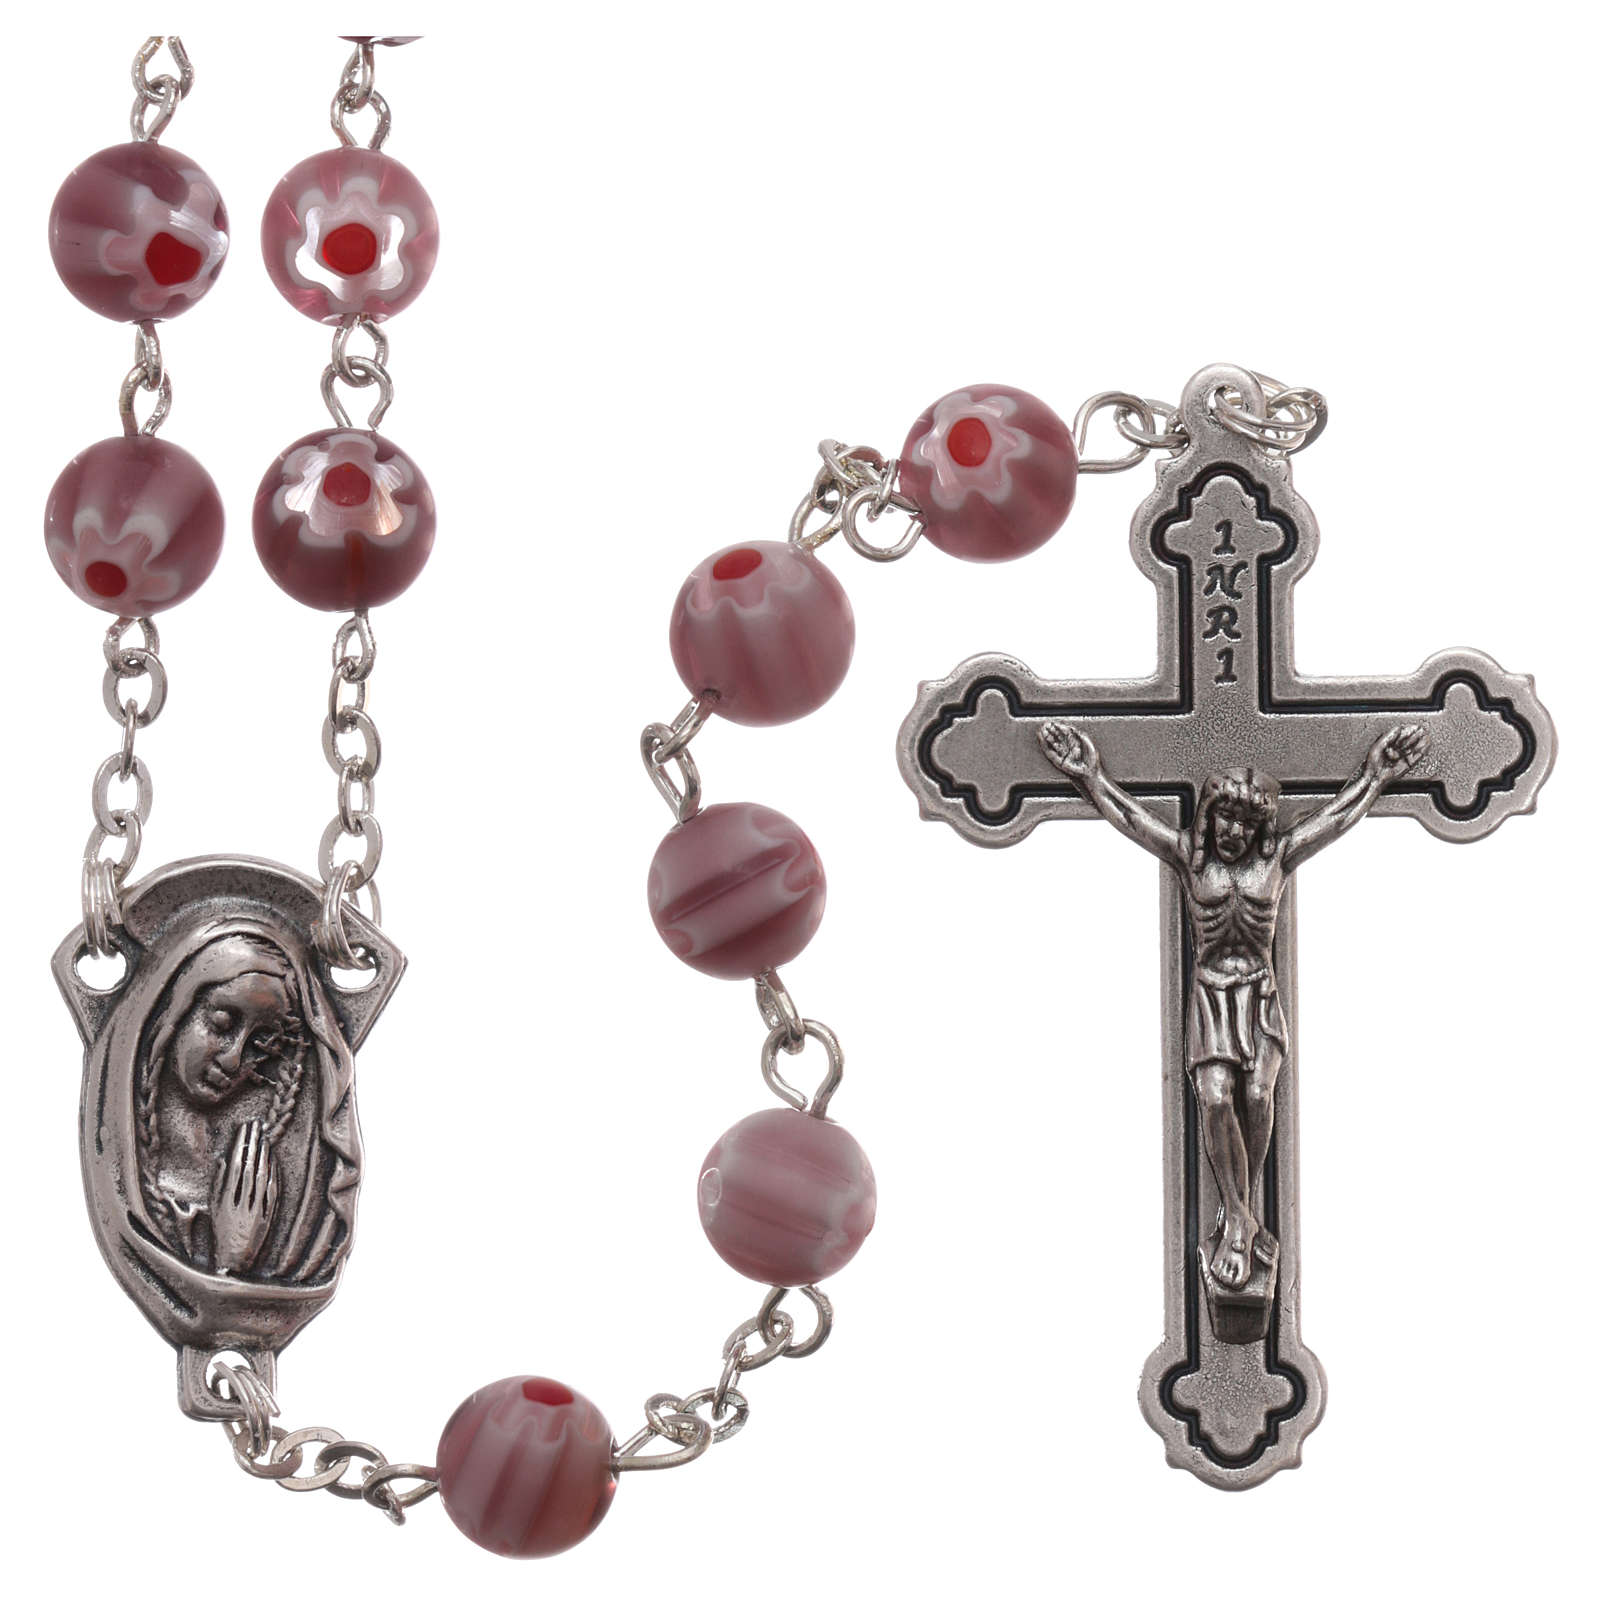 Purple Murano glass style rosary beads, 8mm | online sales on HOLYART.com